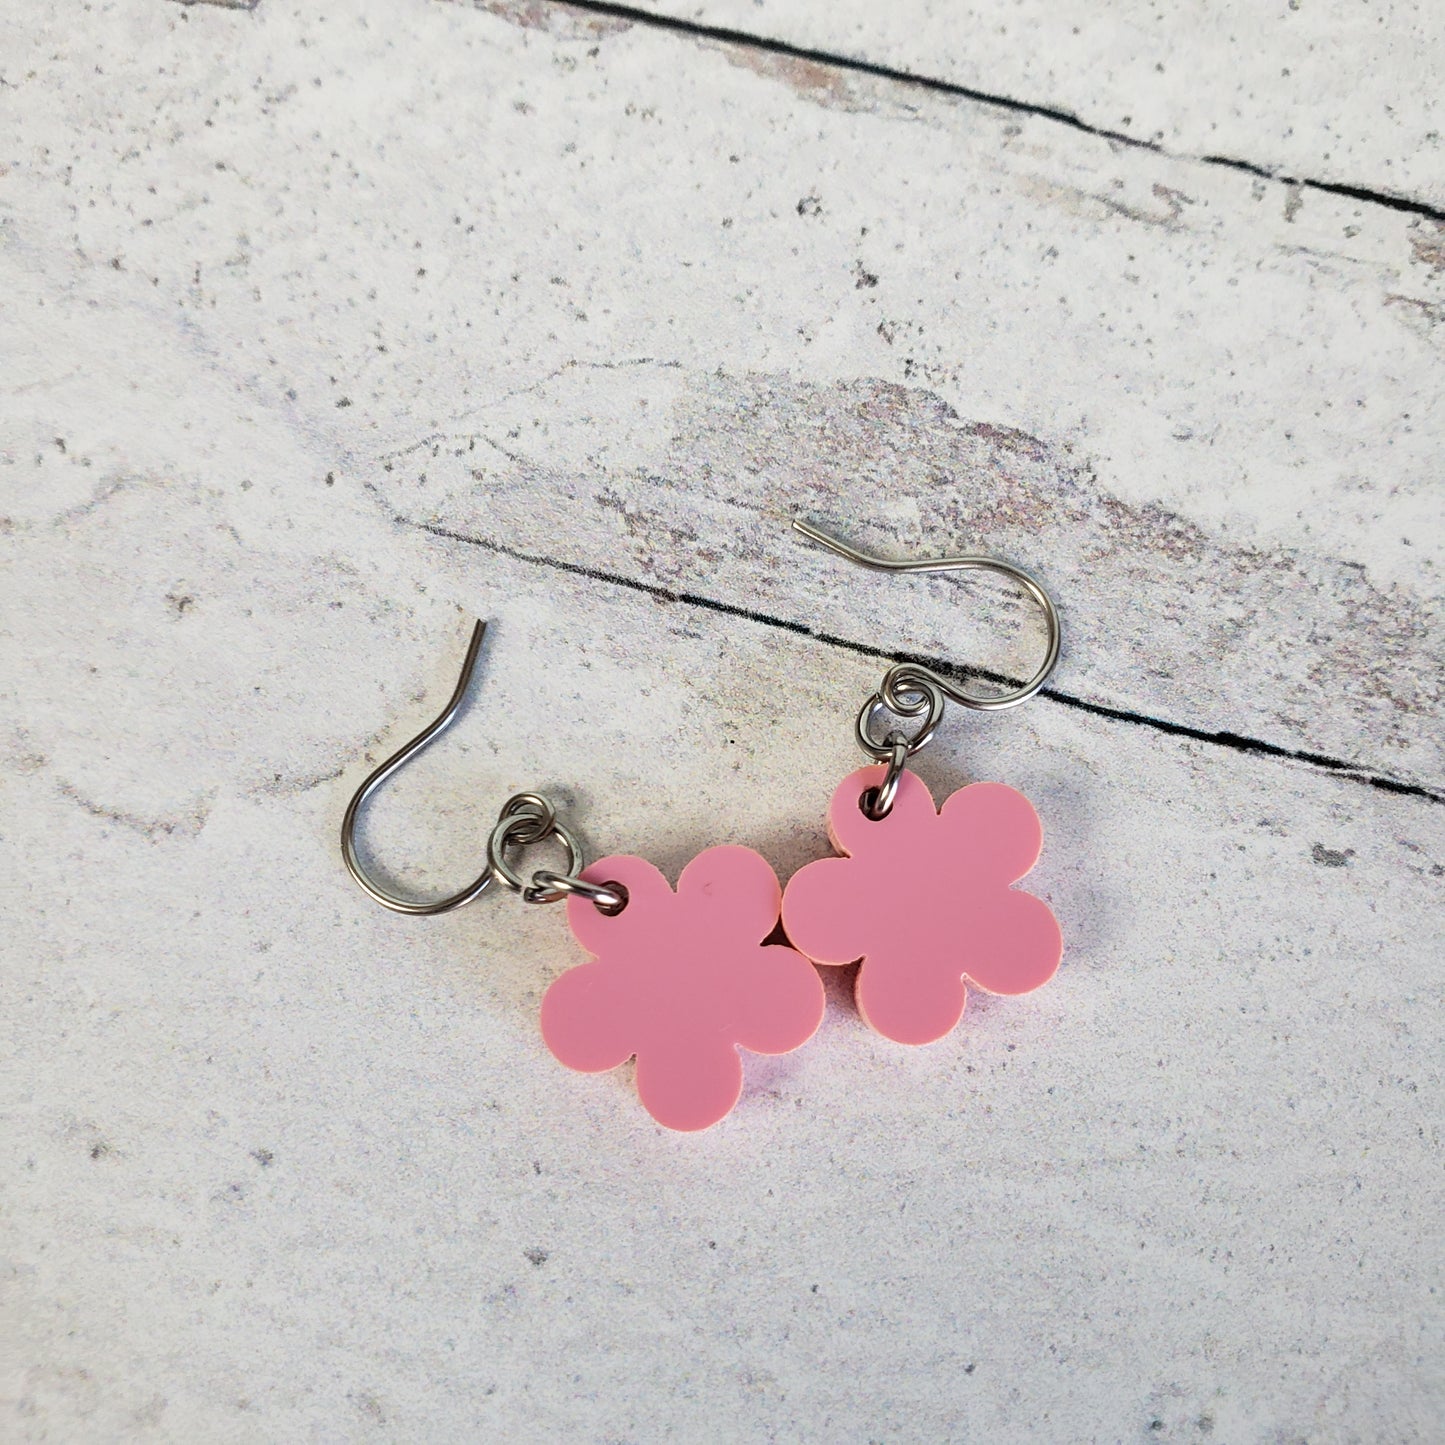 Backside of pink daisy earrings on stainless steel earring wires.